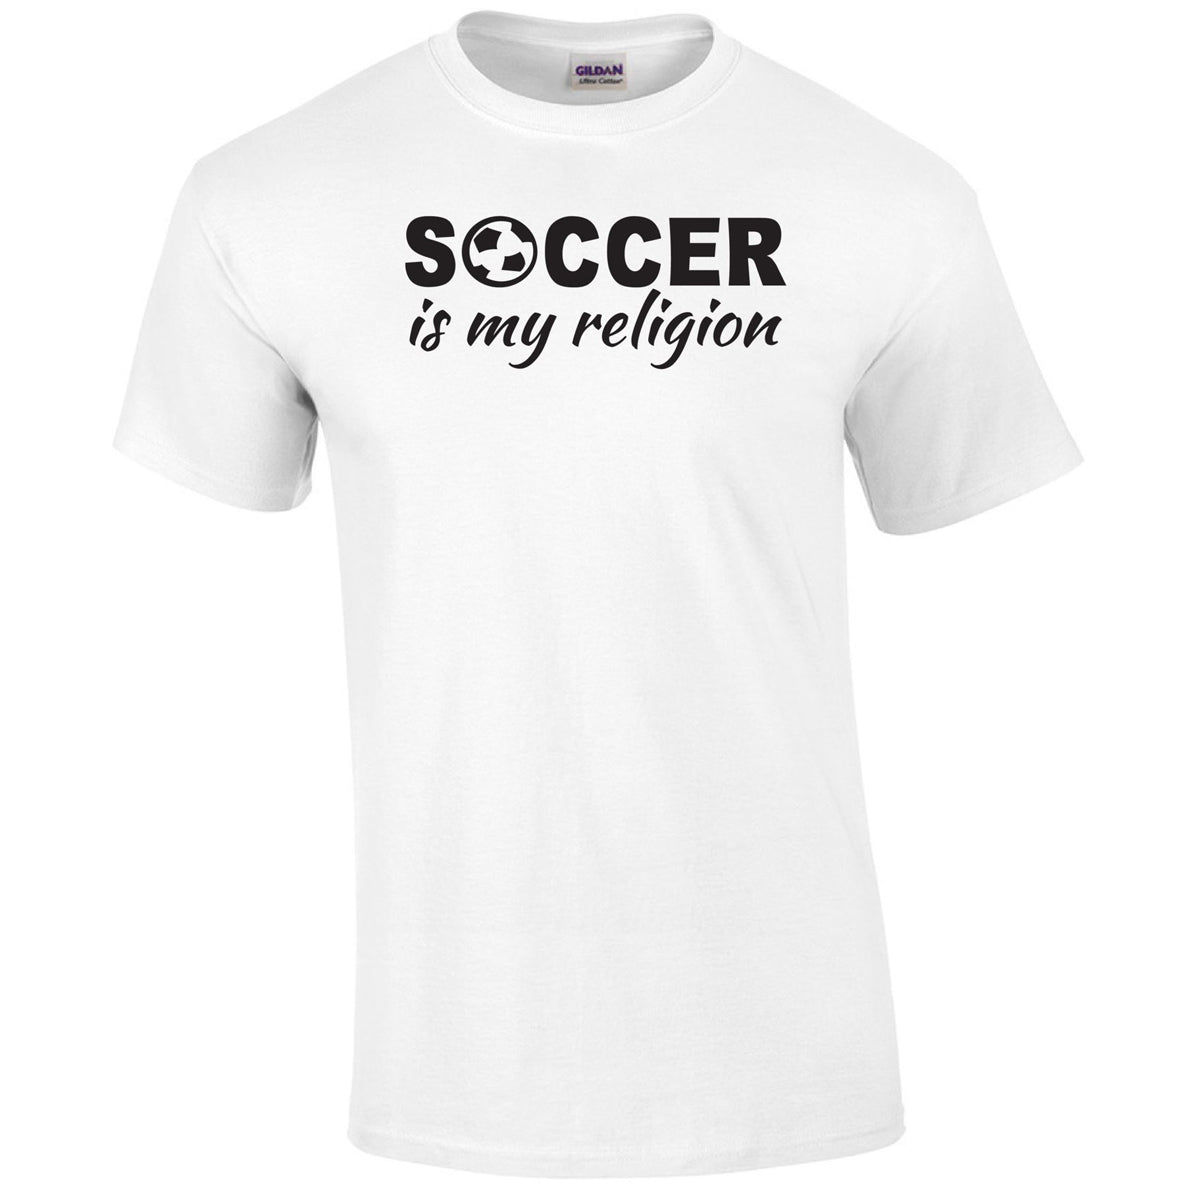 Soccer Is My Religion Printed Tee Humorous Shirt 411 Youth Medium White 